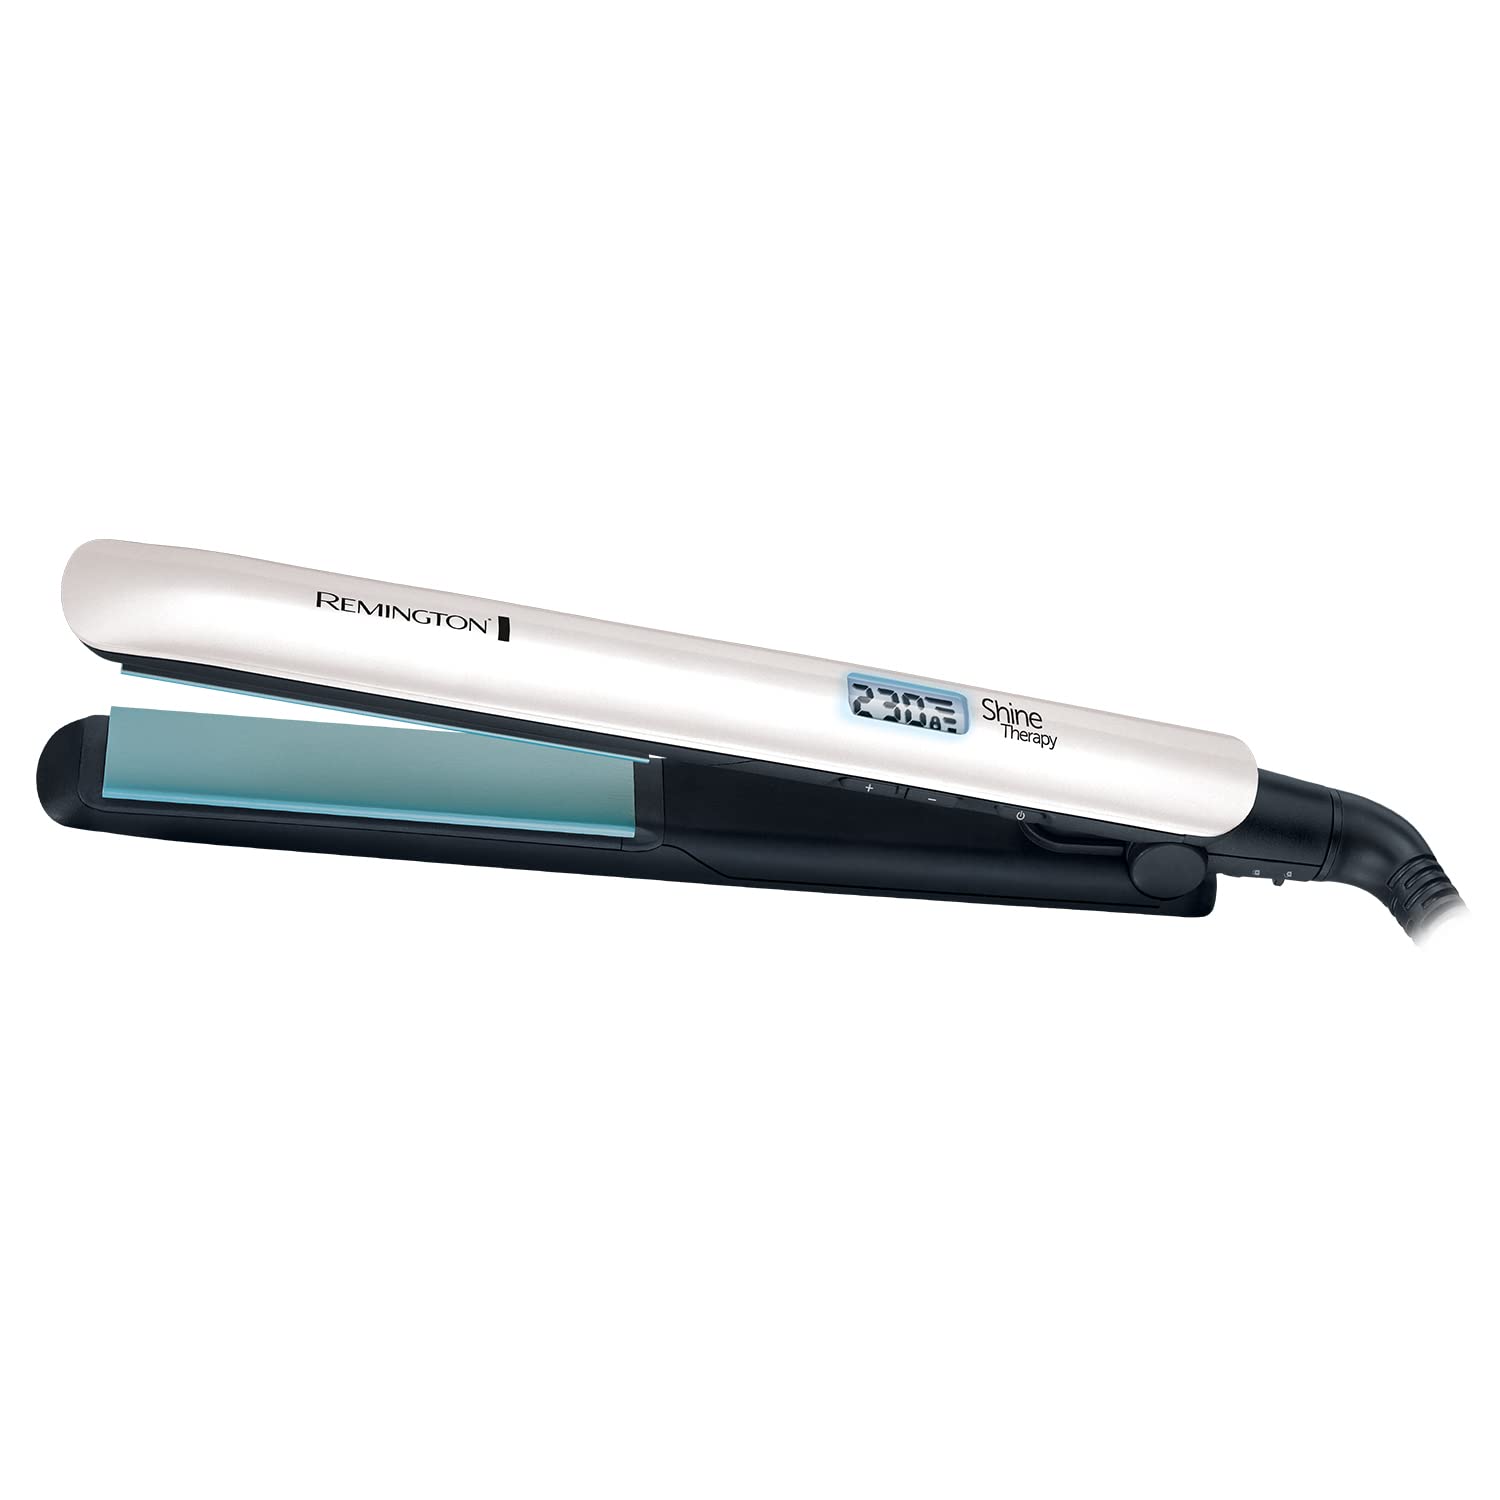 Remington Hair Straightener Shine Therapy - S8500